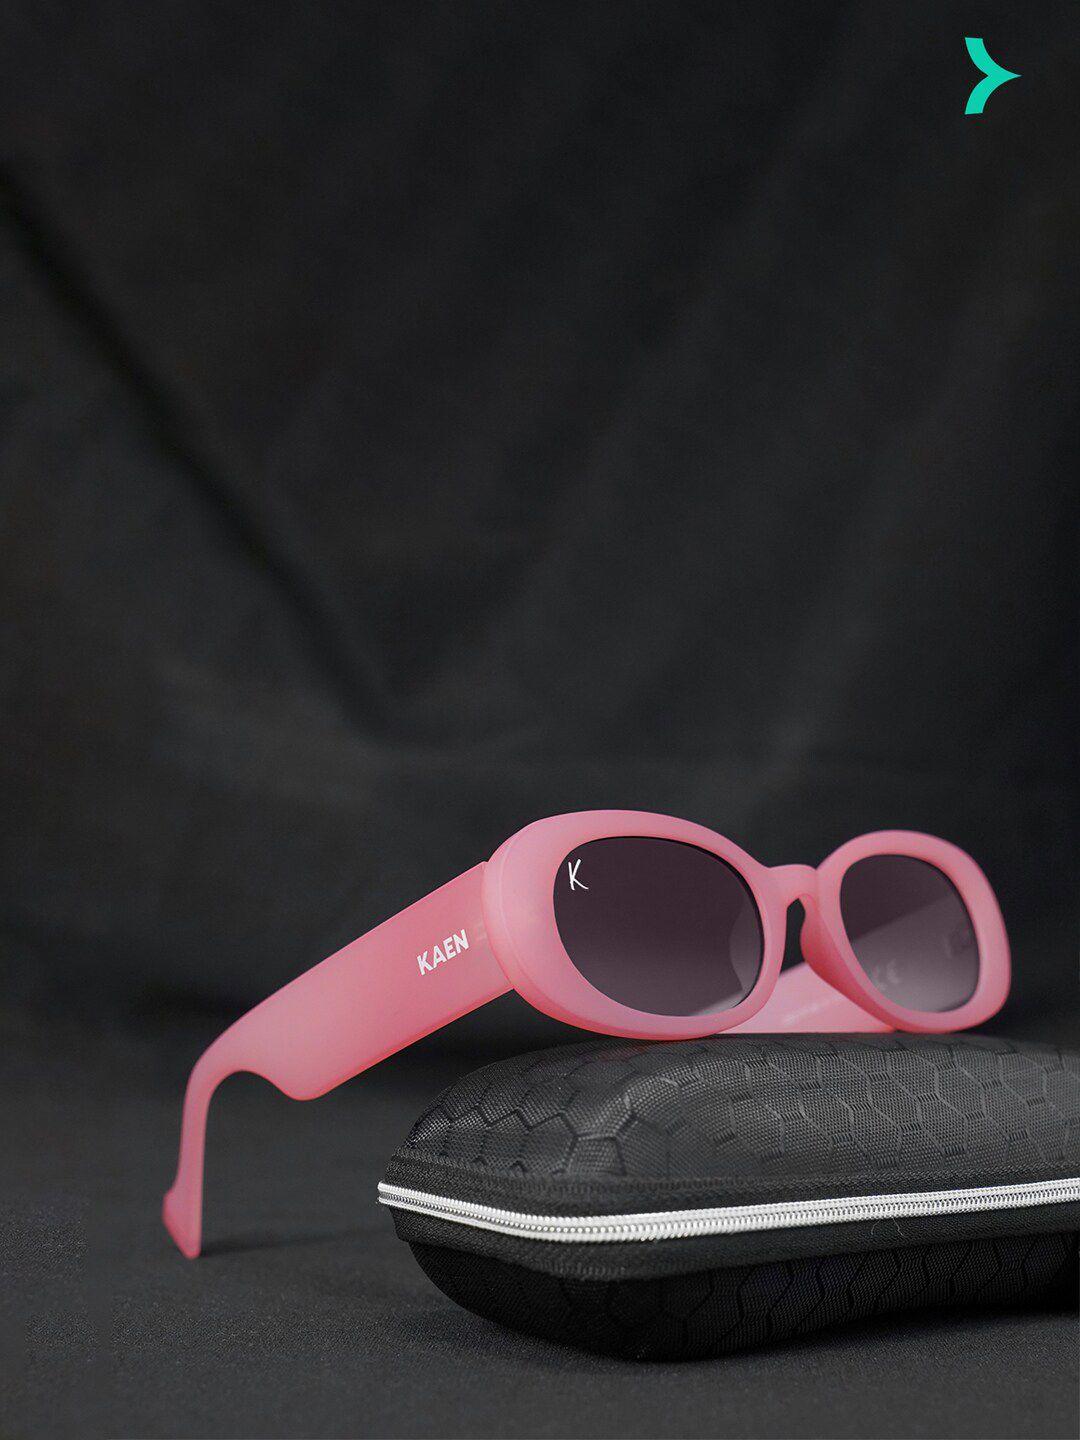 kaen eyewear women oval sunglasses with uv protected lens